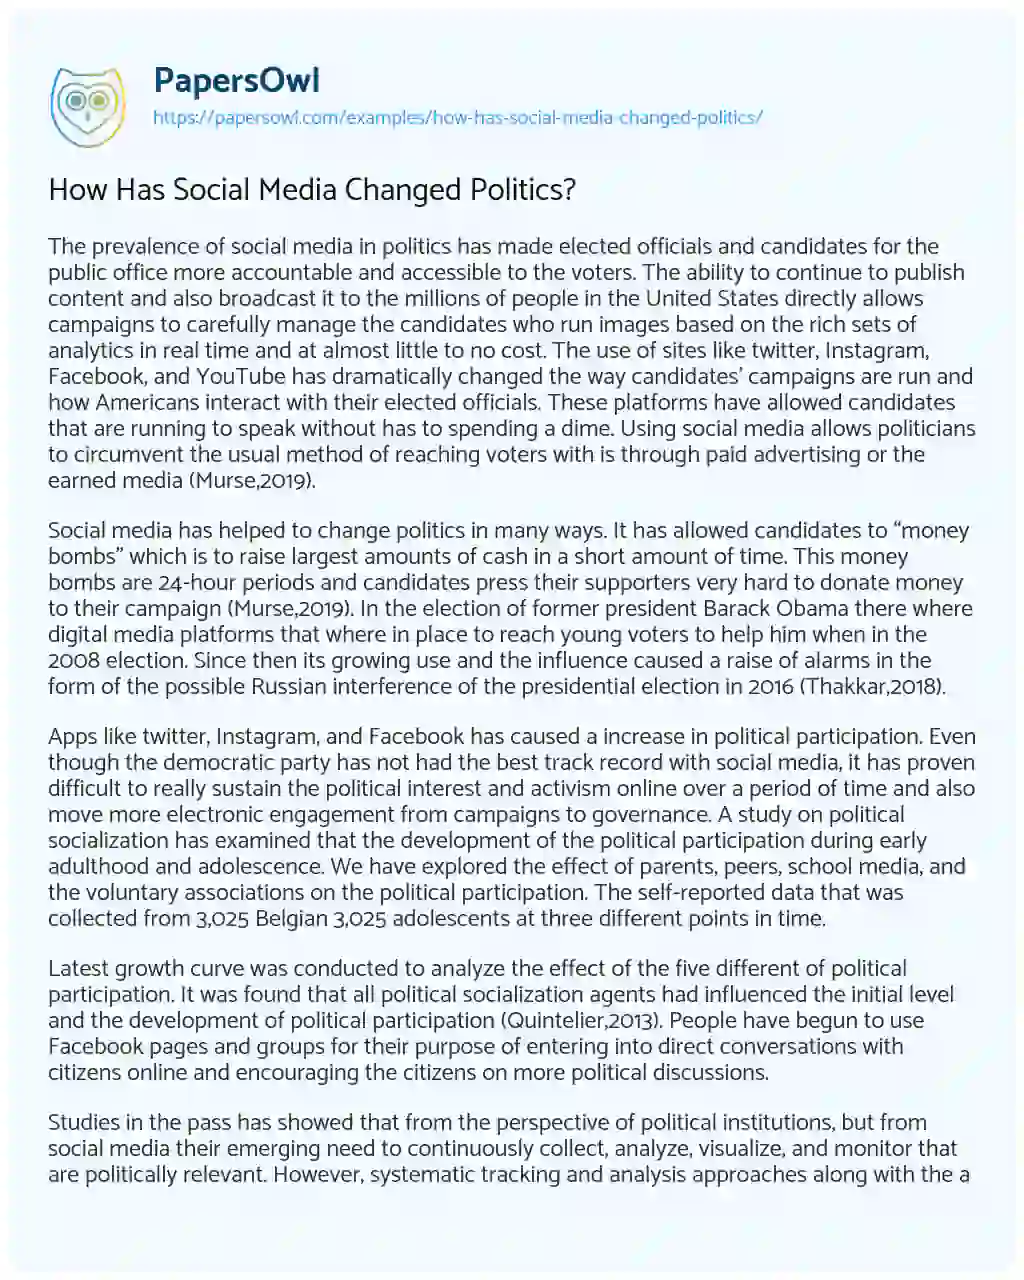 Essay on How has Social Media Changed Politics?